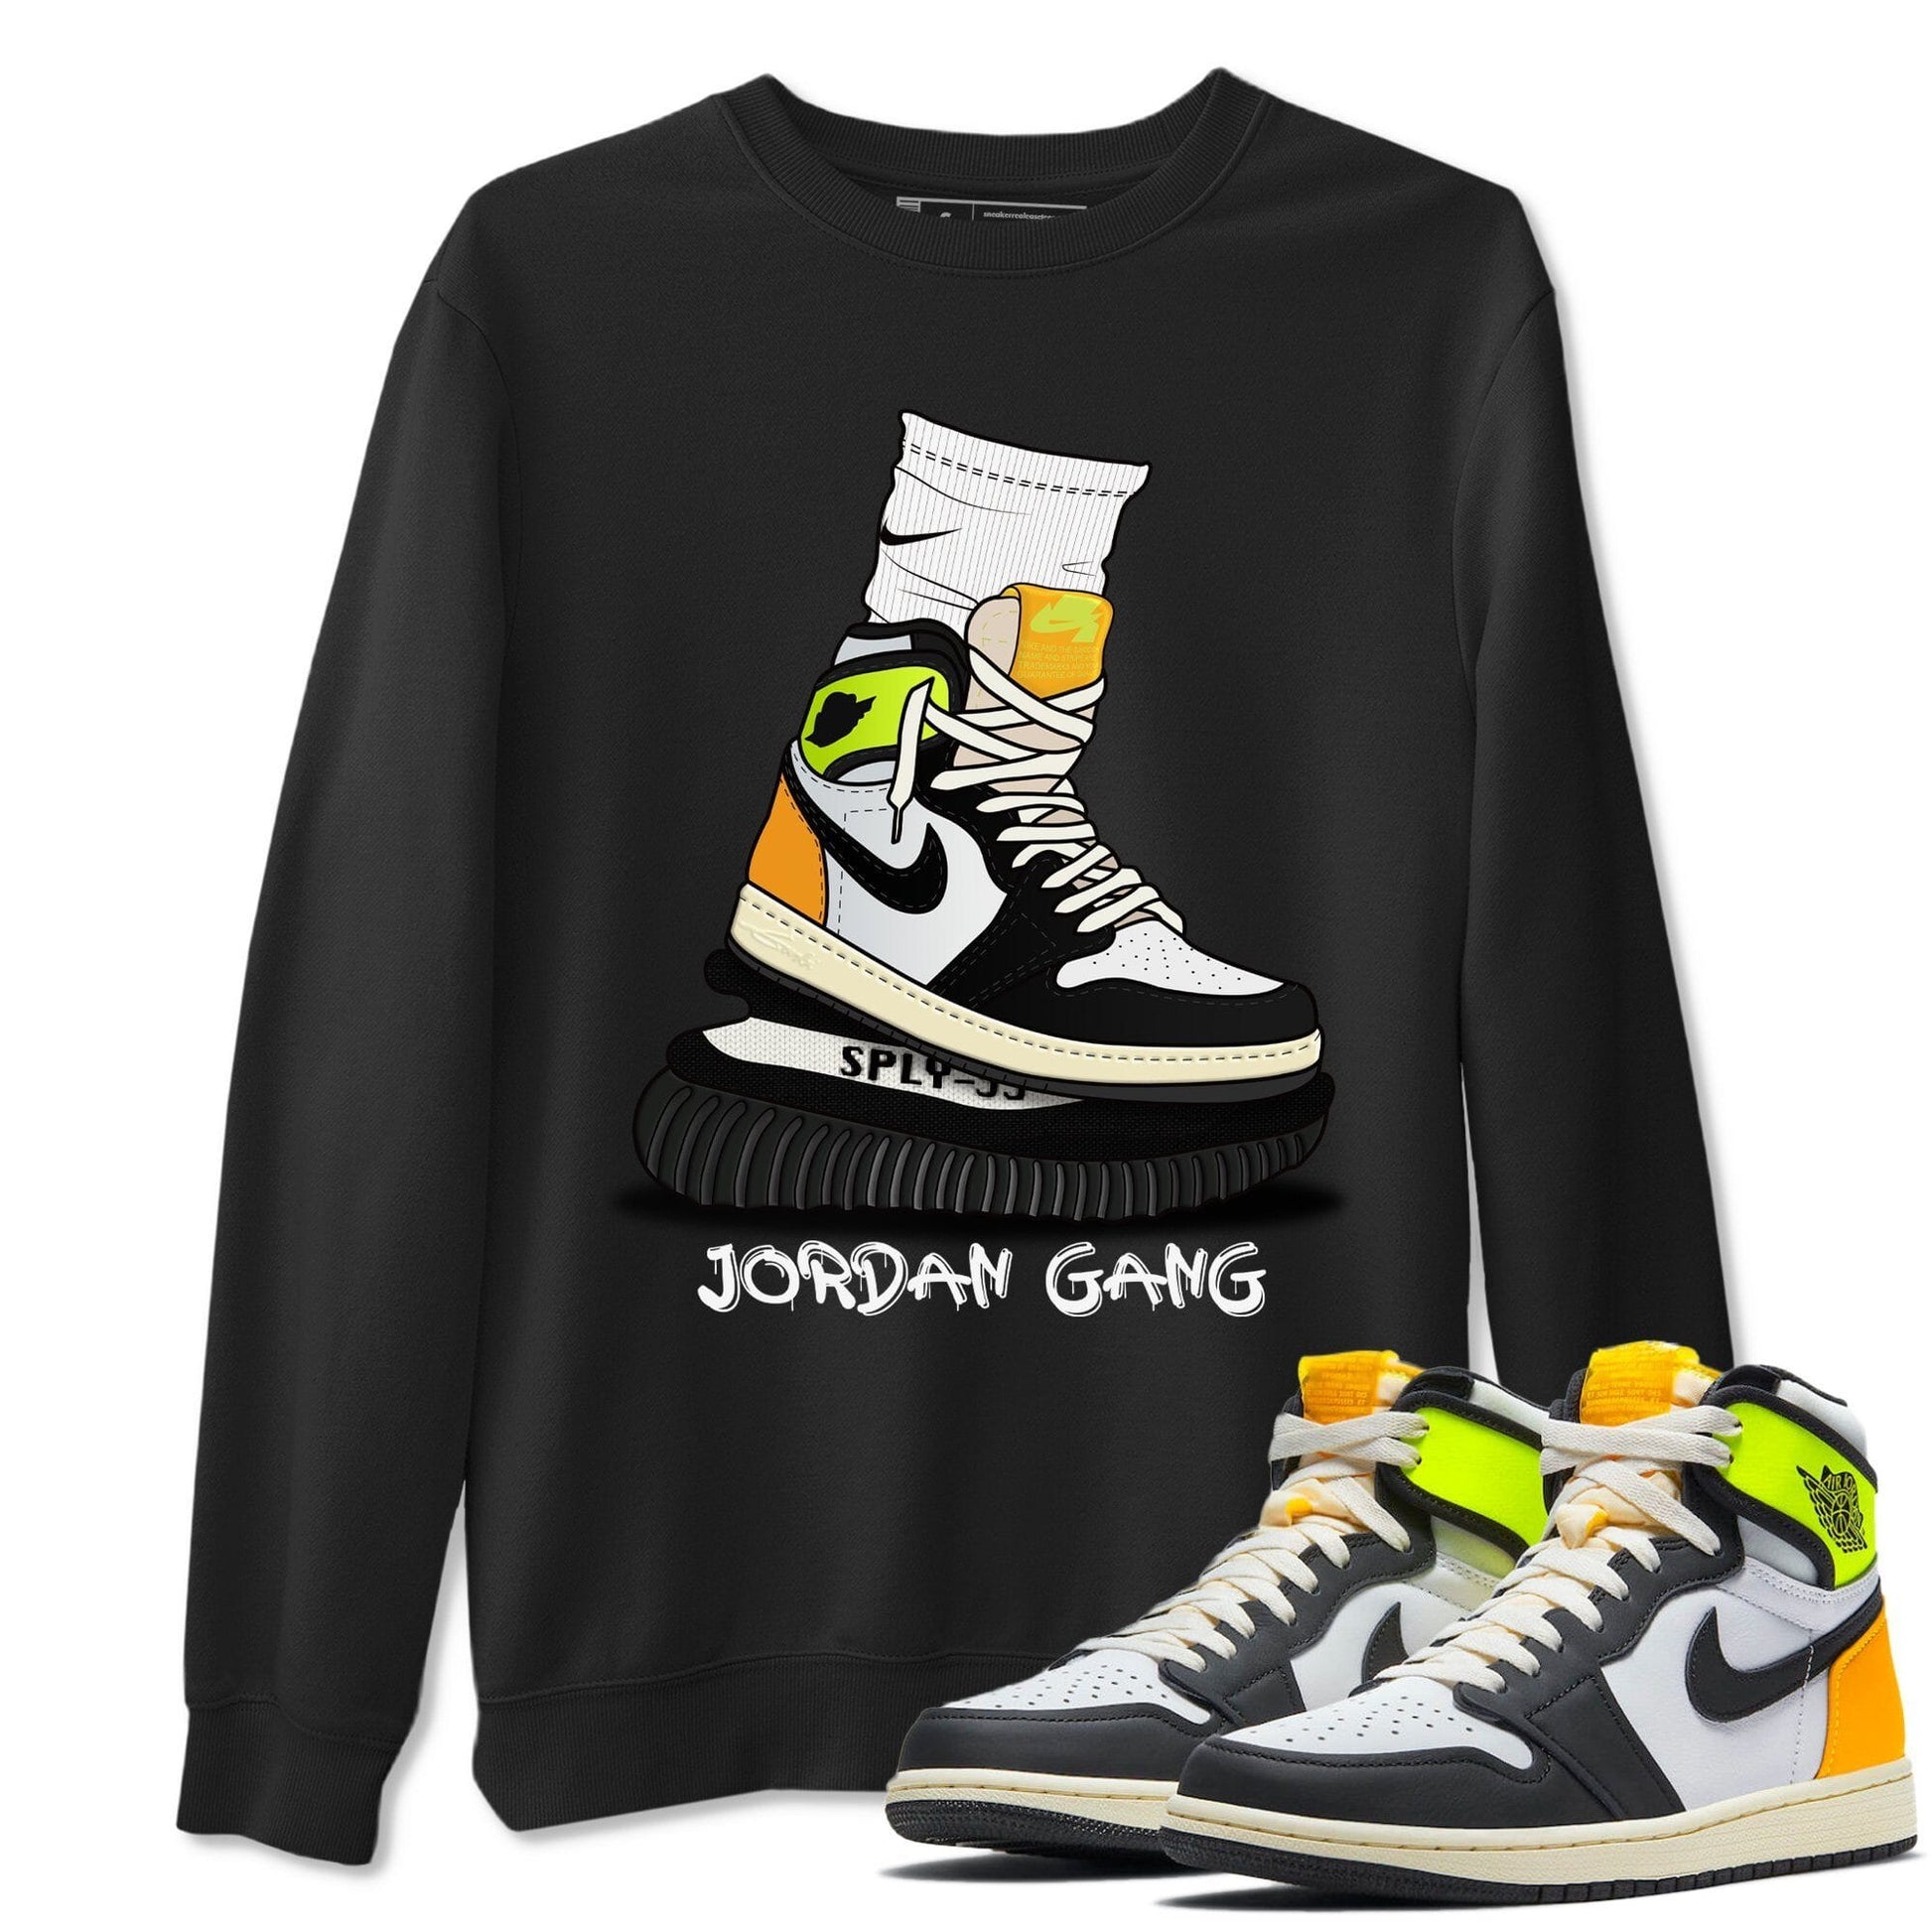 Jordan 1 Volt Gold, Jordan Gang Unisex Shirts